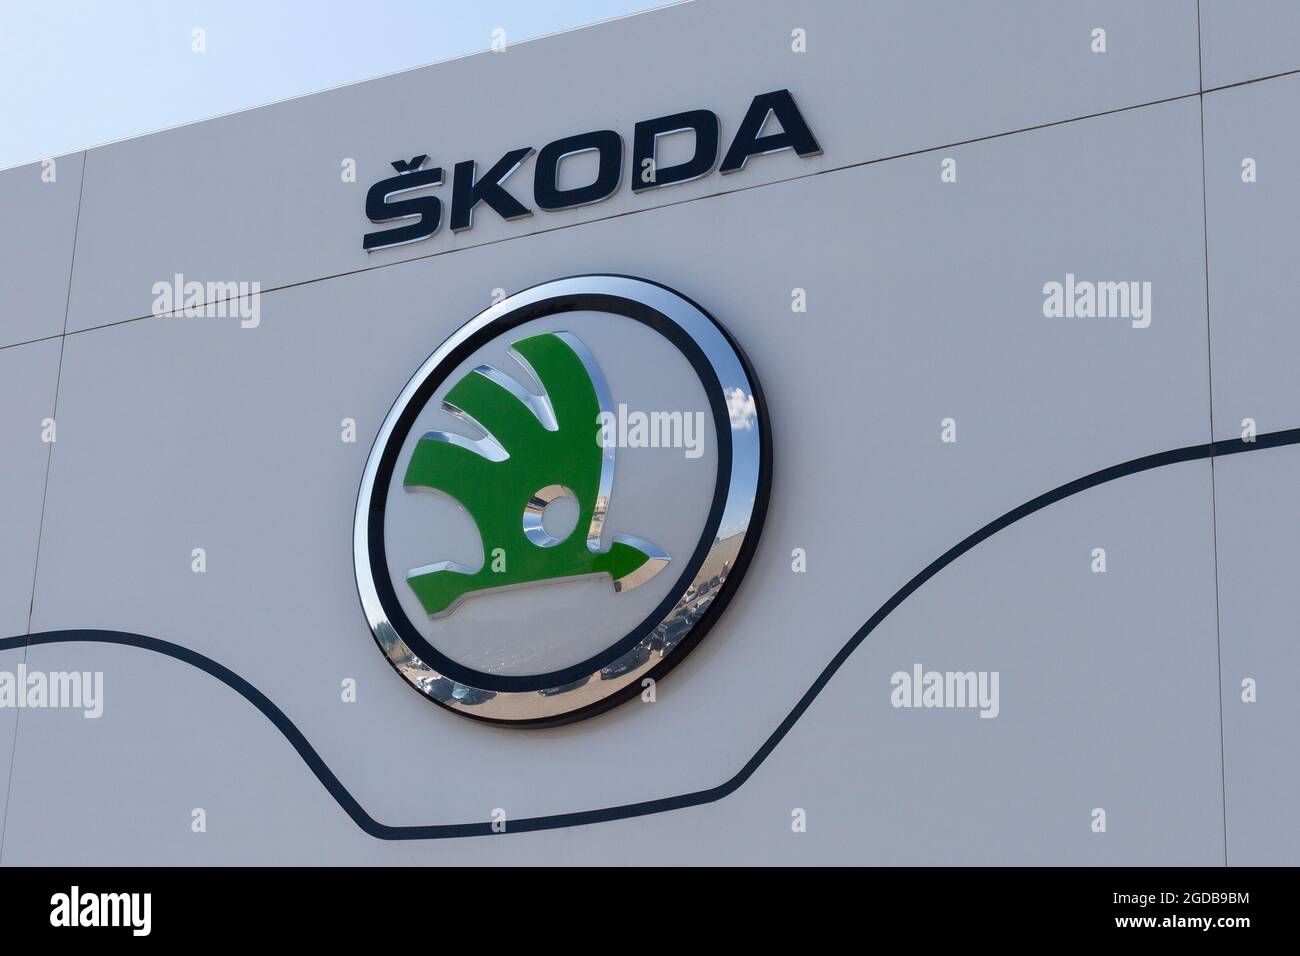 Poznan, POLAND - Jul 30, 2021: Skoda dealership sign in front of the showroom. Closeup of skoda logo on whiteboard. Stock Photo